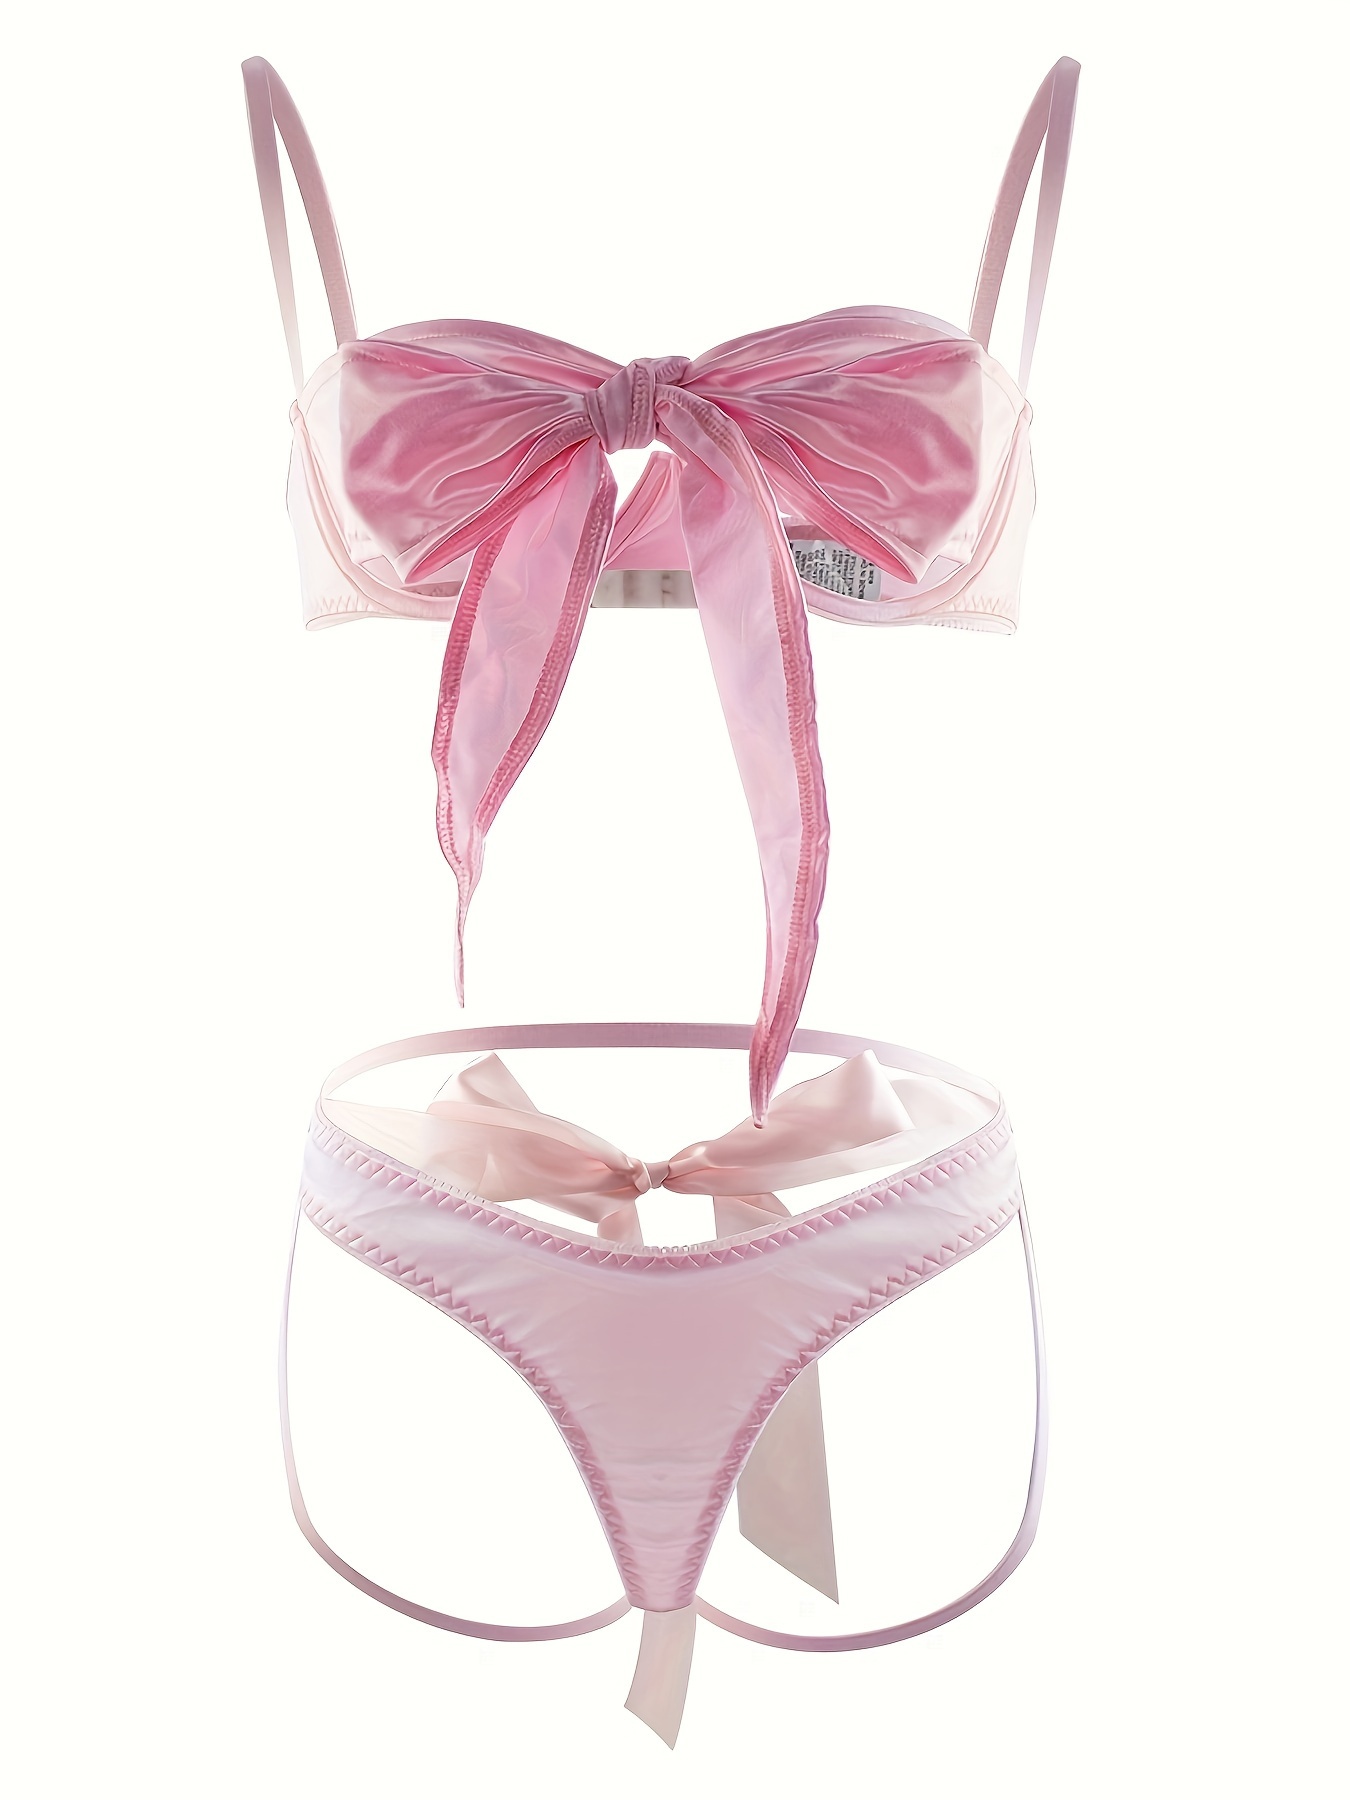 Women's Strap Bow Tie Lingerie Set 2 Piece Cute Bows Bra and Panty